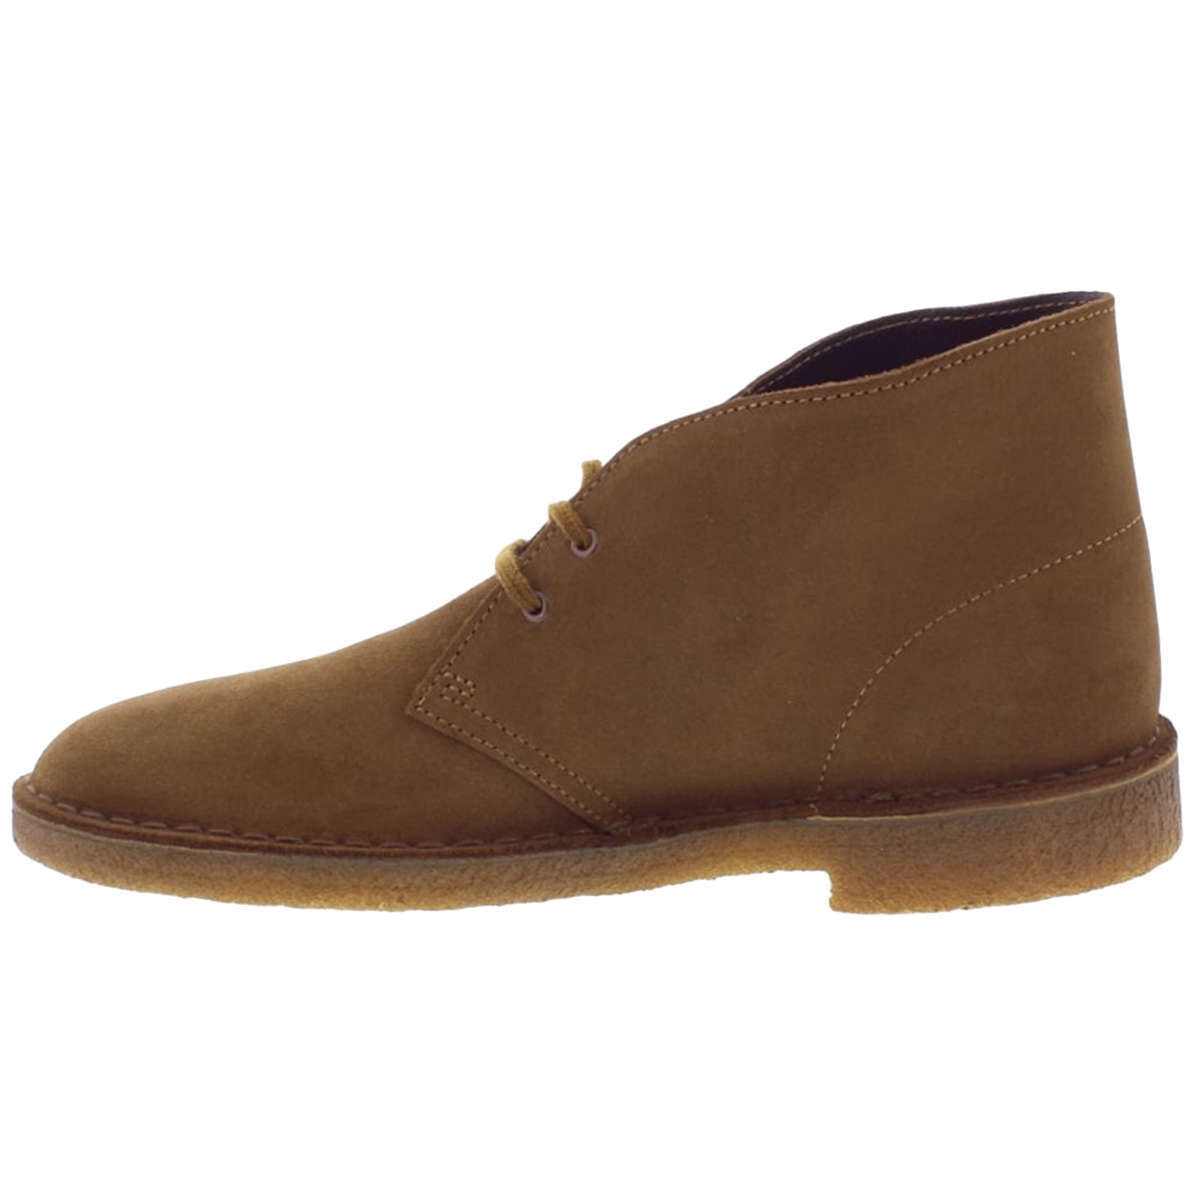 Clarks Originals Desert Boot Suede Leather Men's Boots#color_cola